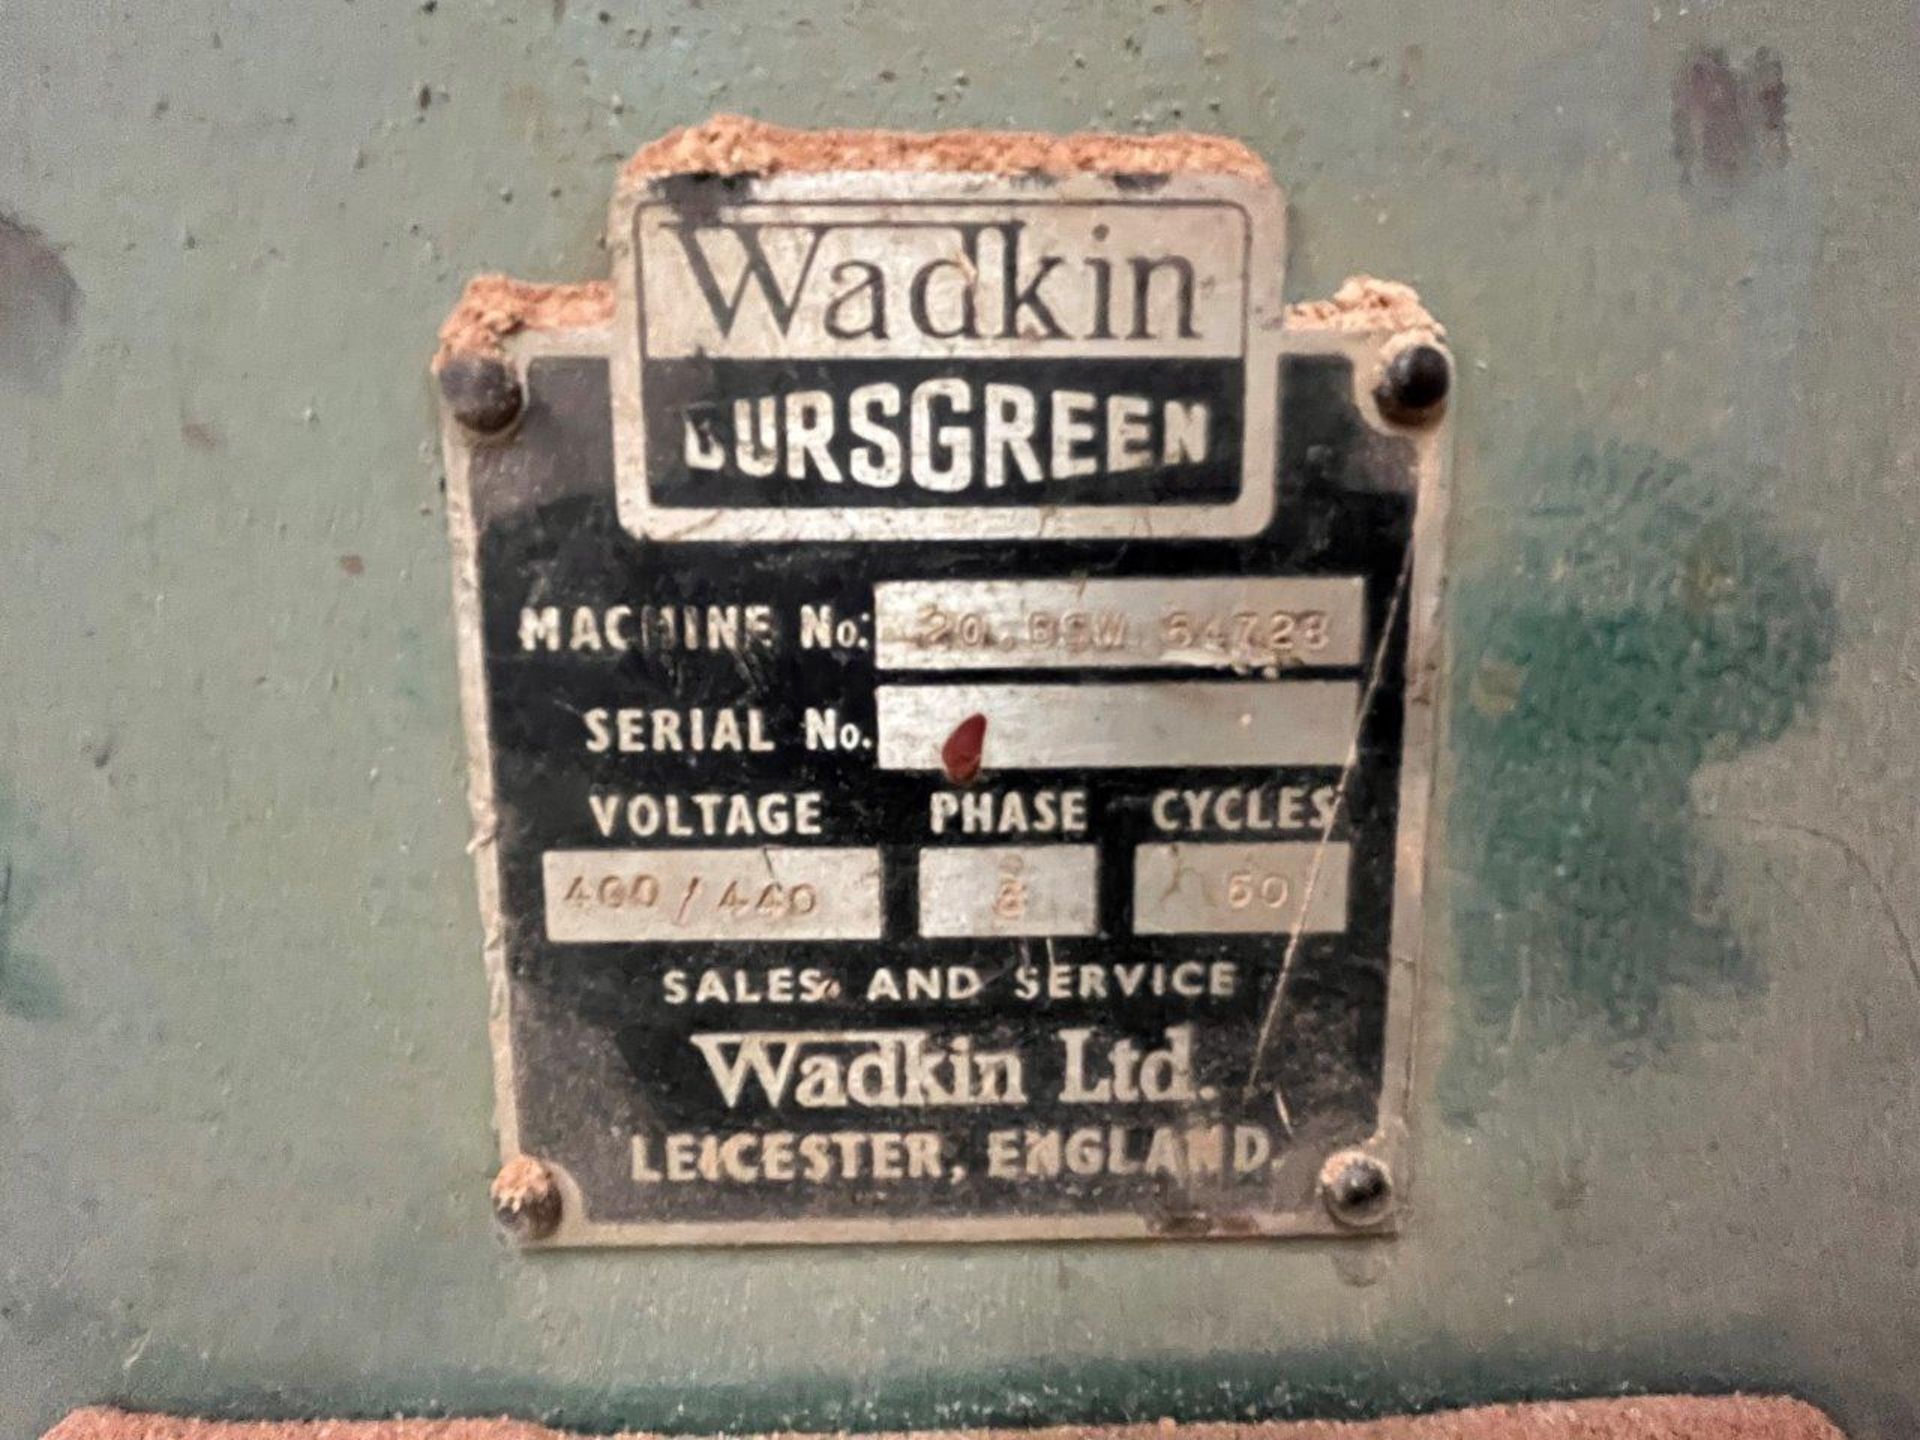 Wadkin Bursgreen 20BSW rip saw, serial no. 64728 - Image 4 of 5